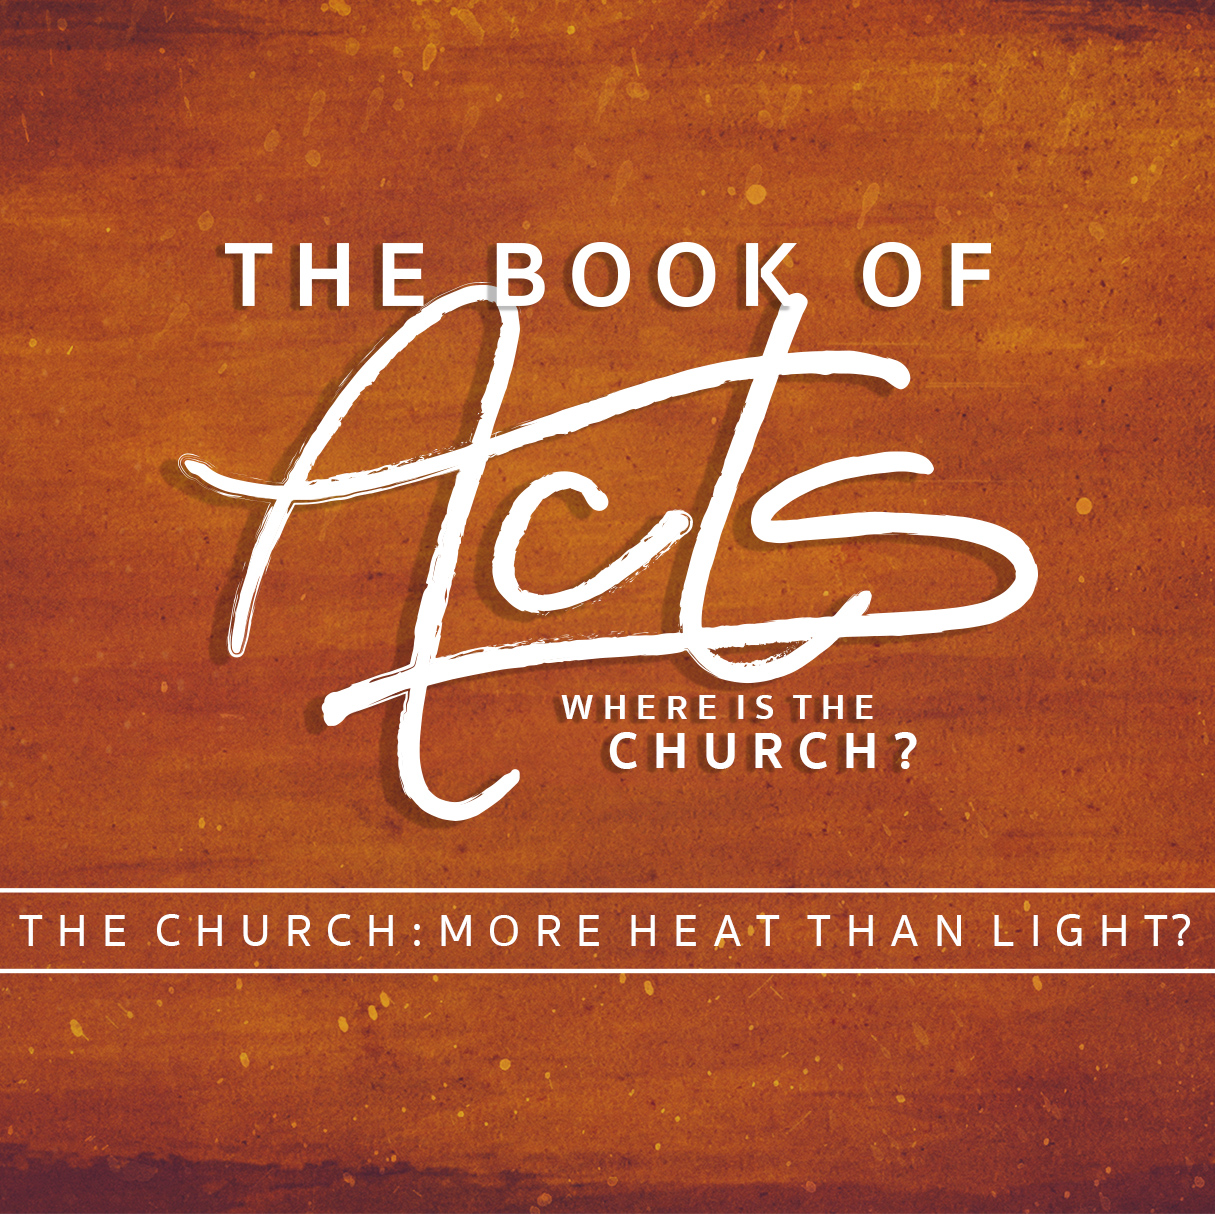 The Church: More Heat than Light?